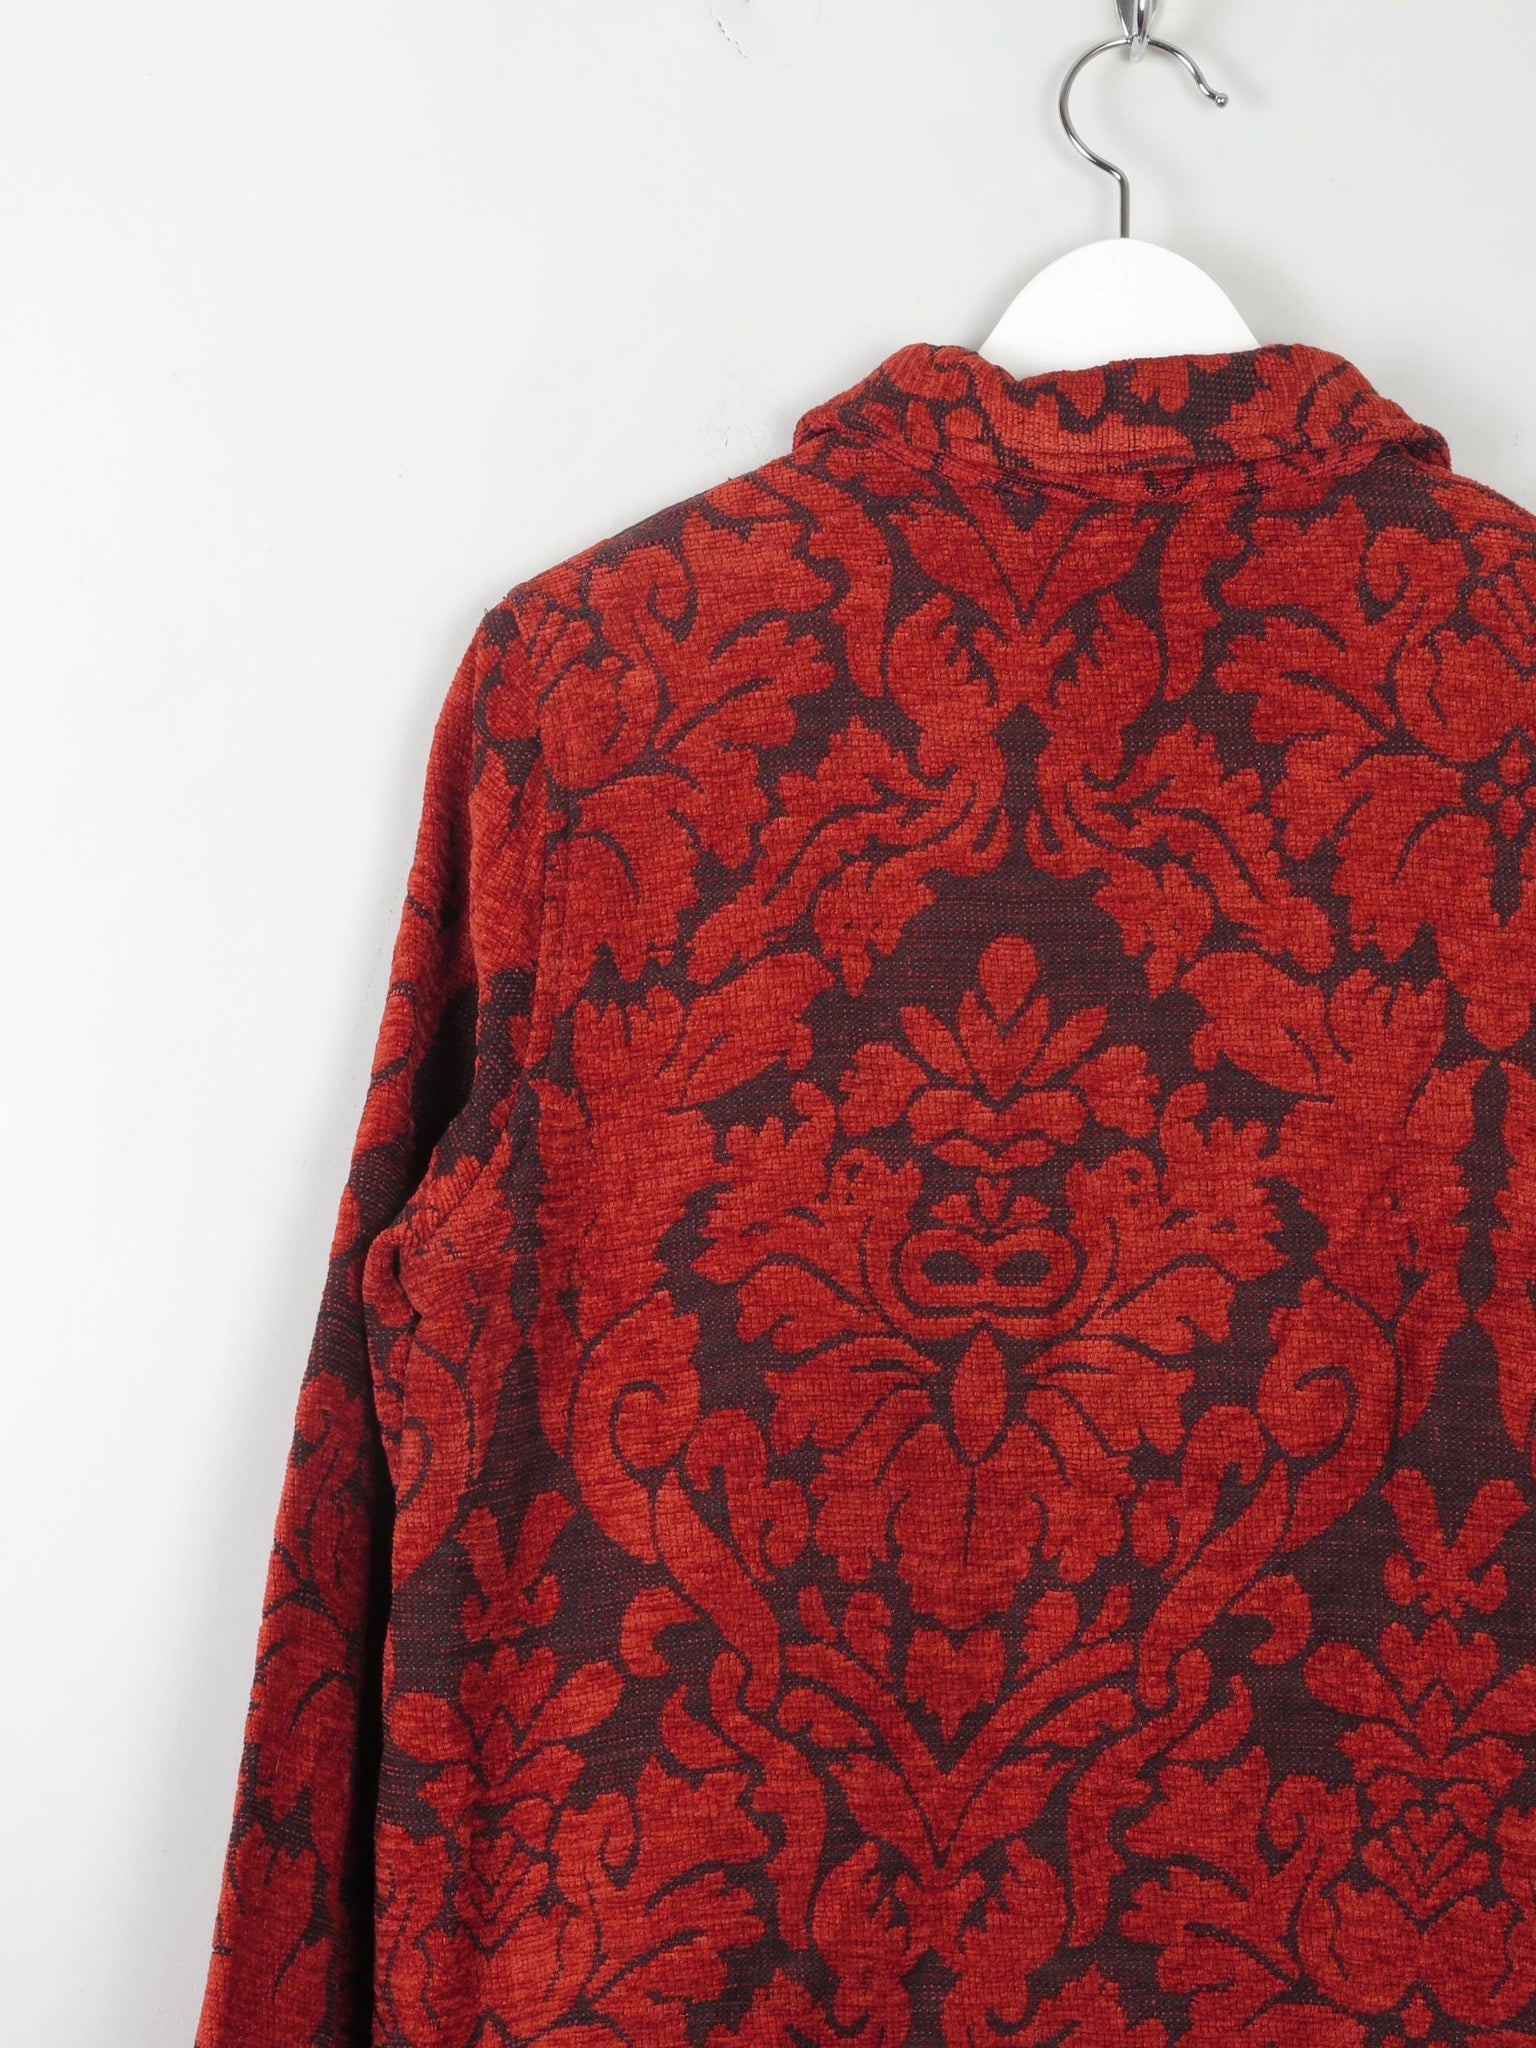 Women's Wine Tapestry Brocade Jacket S/M - The Harlequin